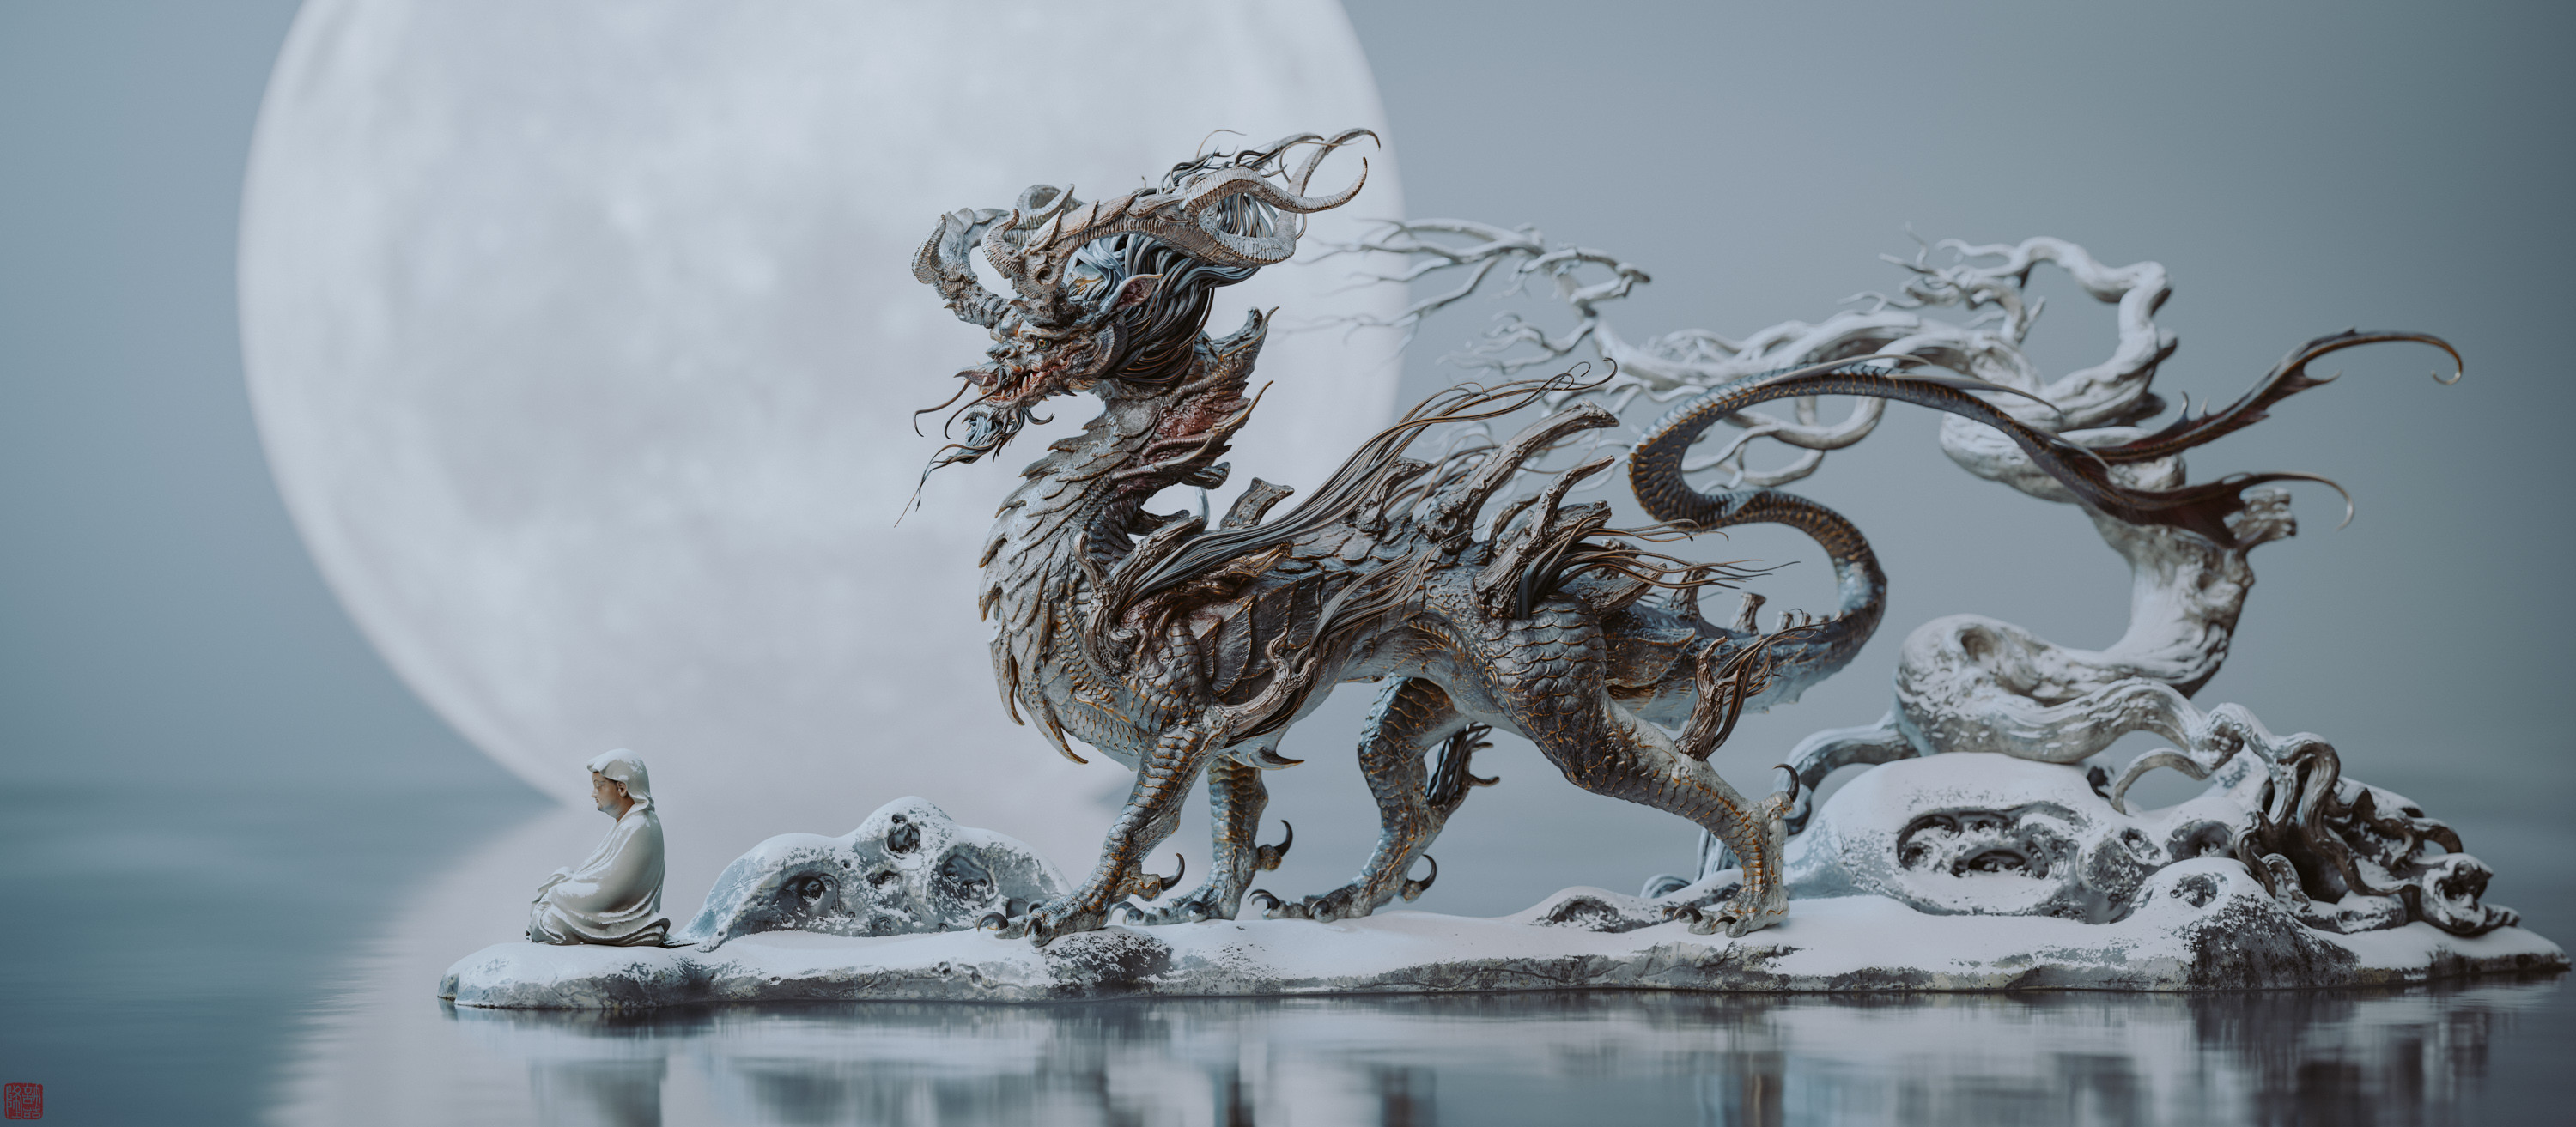 General 3000x1313 artwork digital art fantasy art dragon creature water Moon Chinese dragon